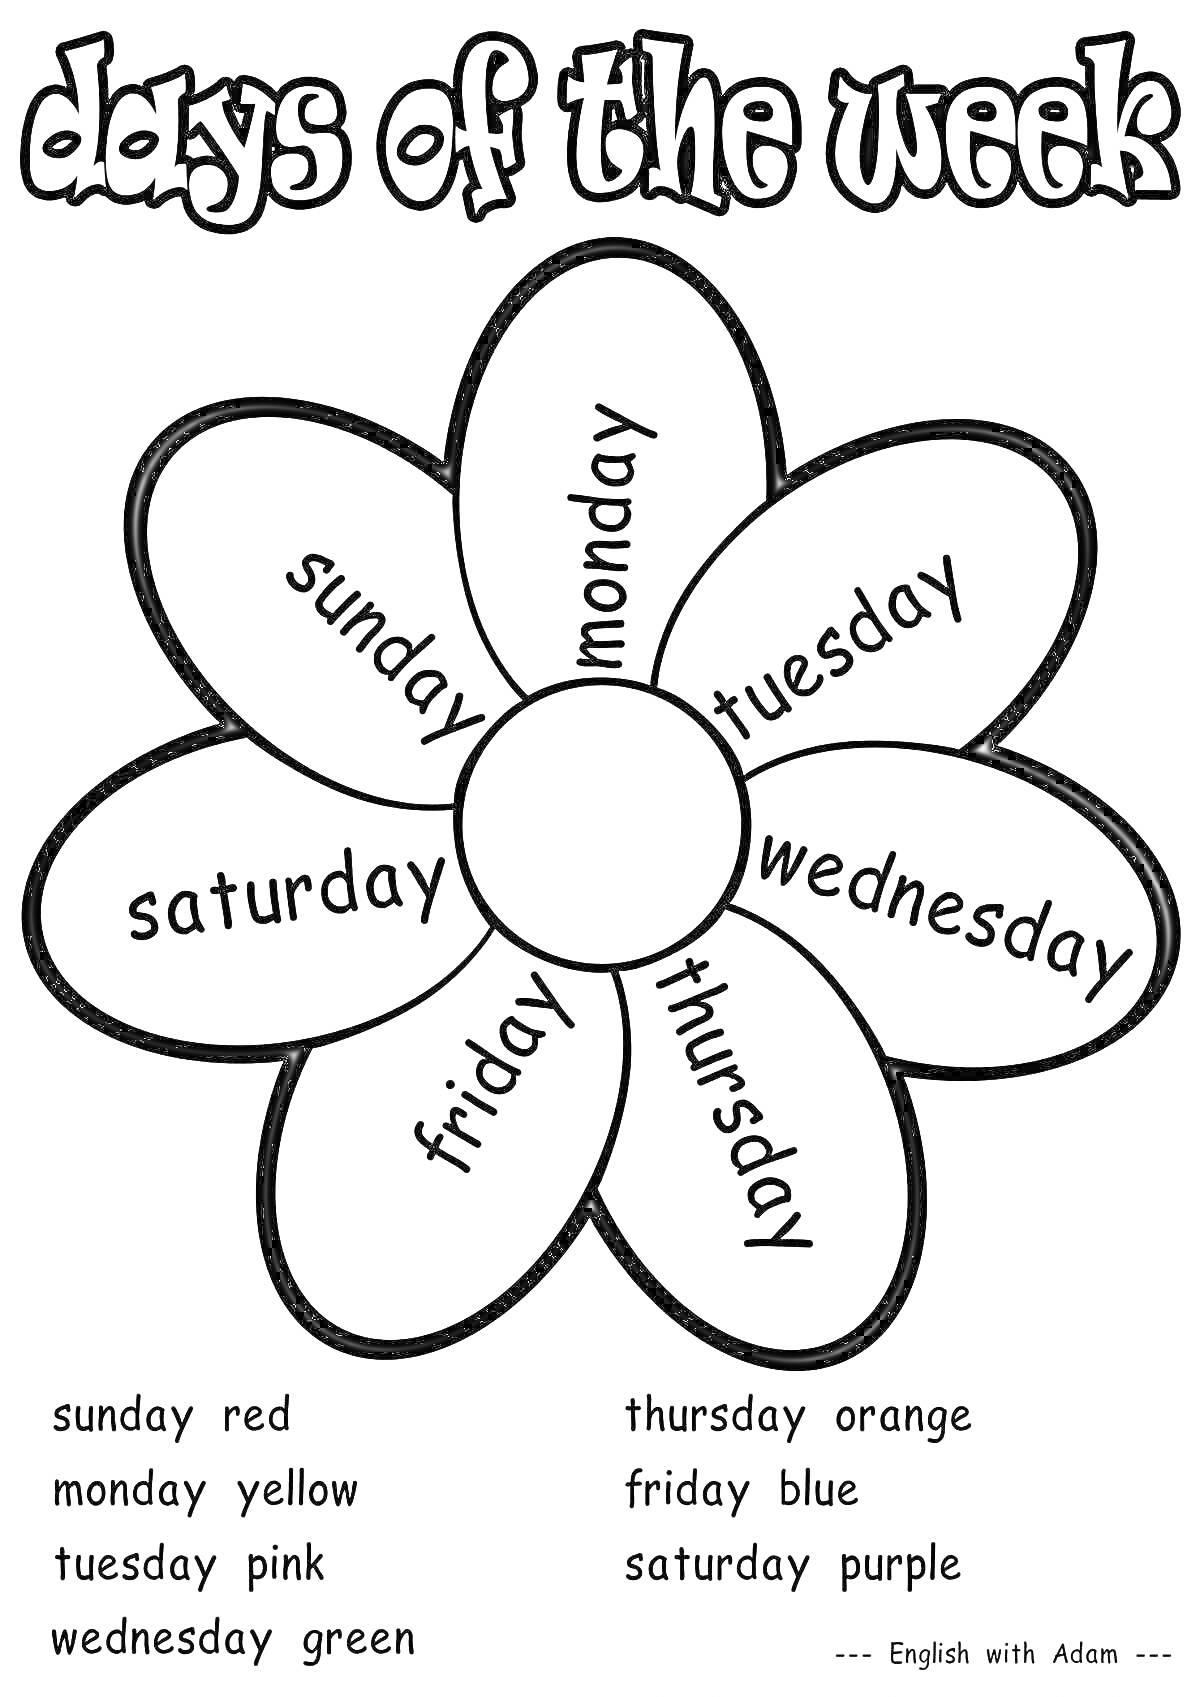 Раскраска Дни недели цветок (Sunday red, Monday yellow, Tuesday pink, Wednesday green, Thursday orange, Friday blue, Saturday purple)